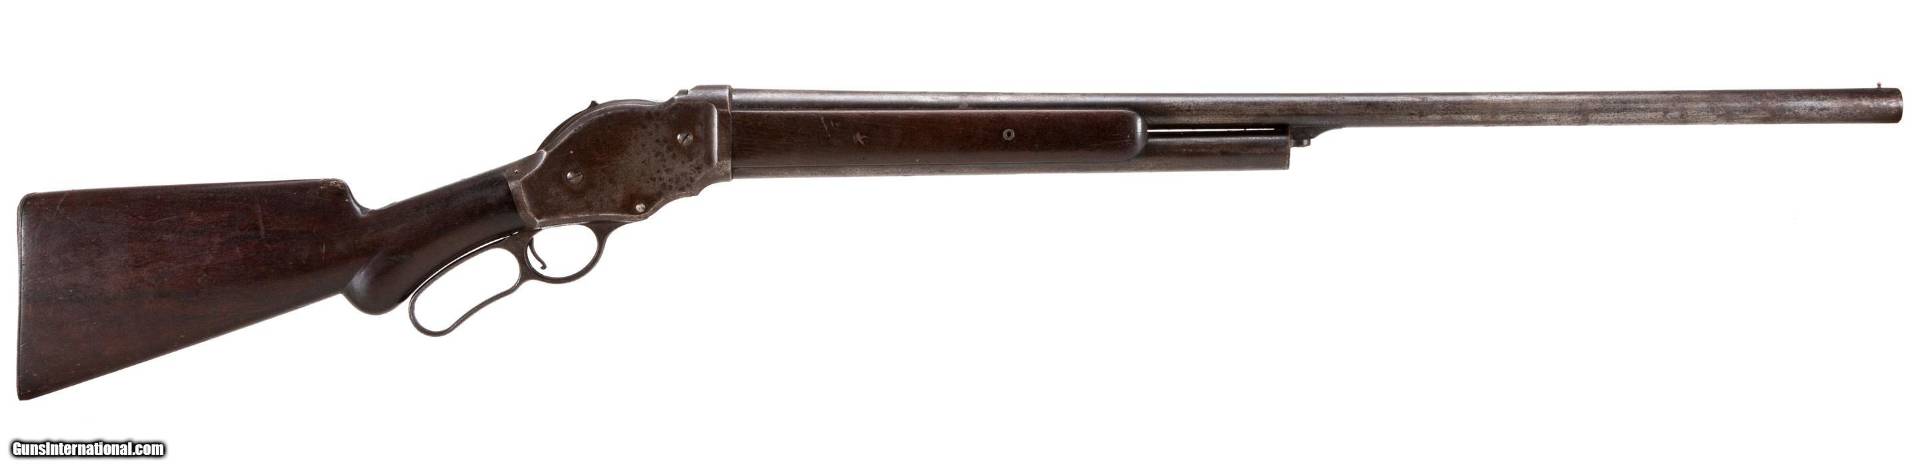 Winchester model 1897 fallout 4 фото 115